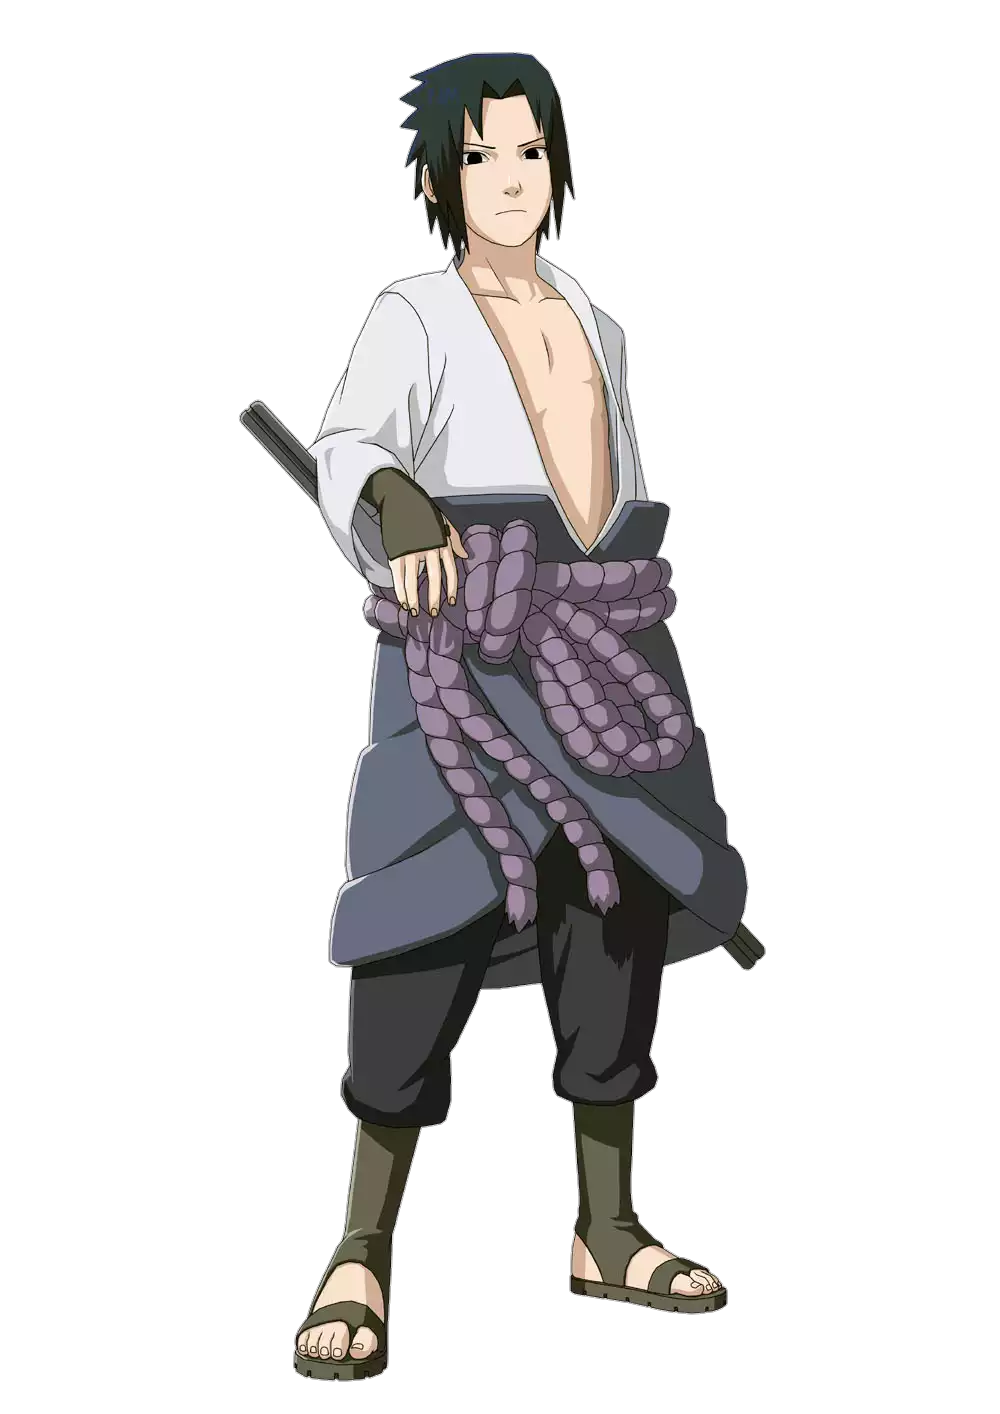 Shippuden Sasuke Render By Skodwarde | Personajes de ... - Sasuke Demon